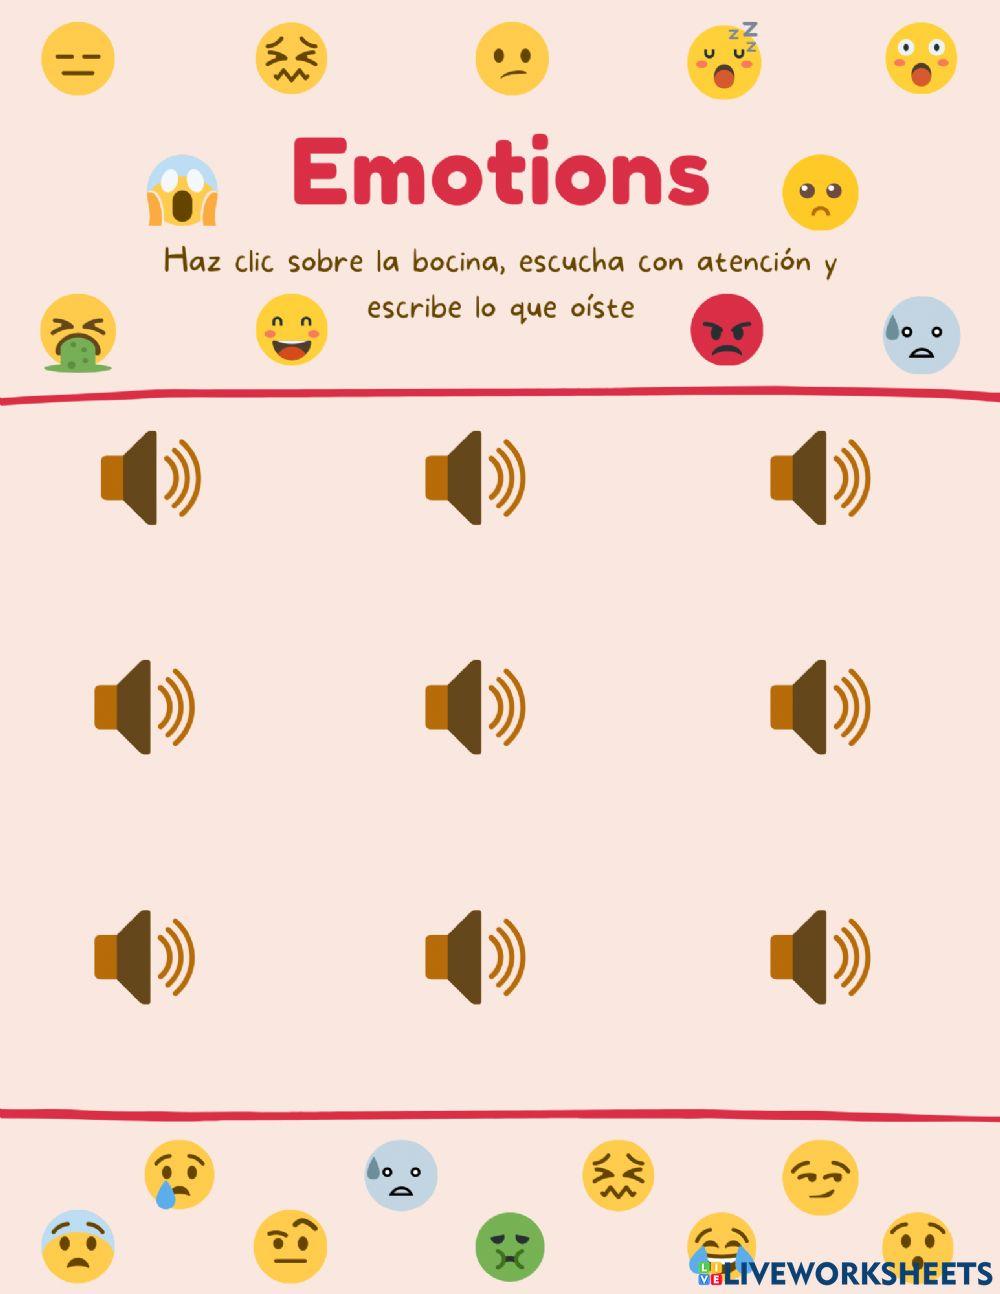 Emotions online exercise for Sexto de primaria | Live Worksheets